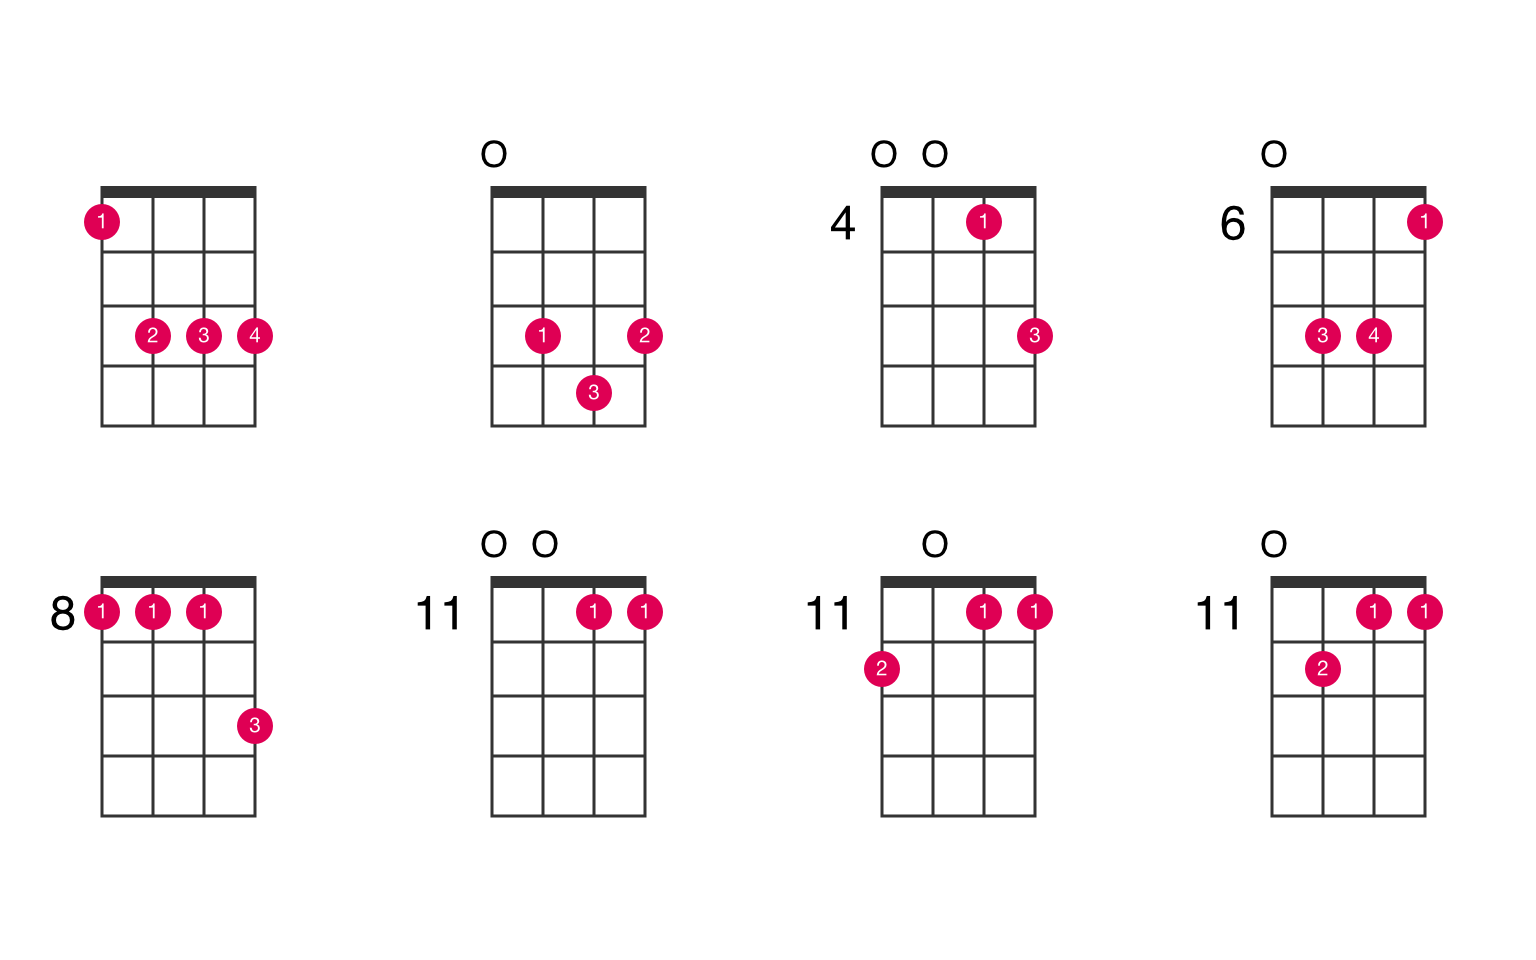 g flat major 7 guitar chord